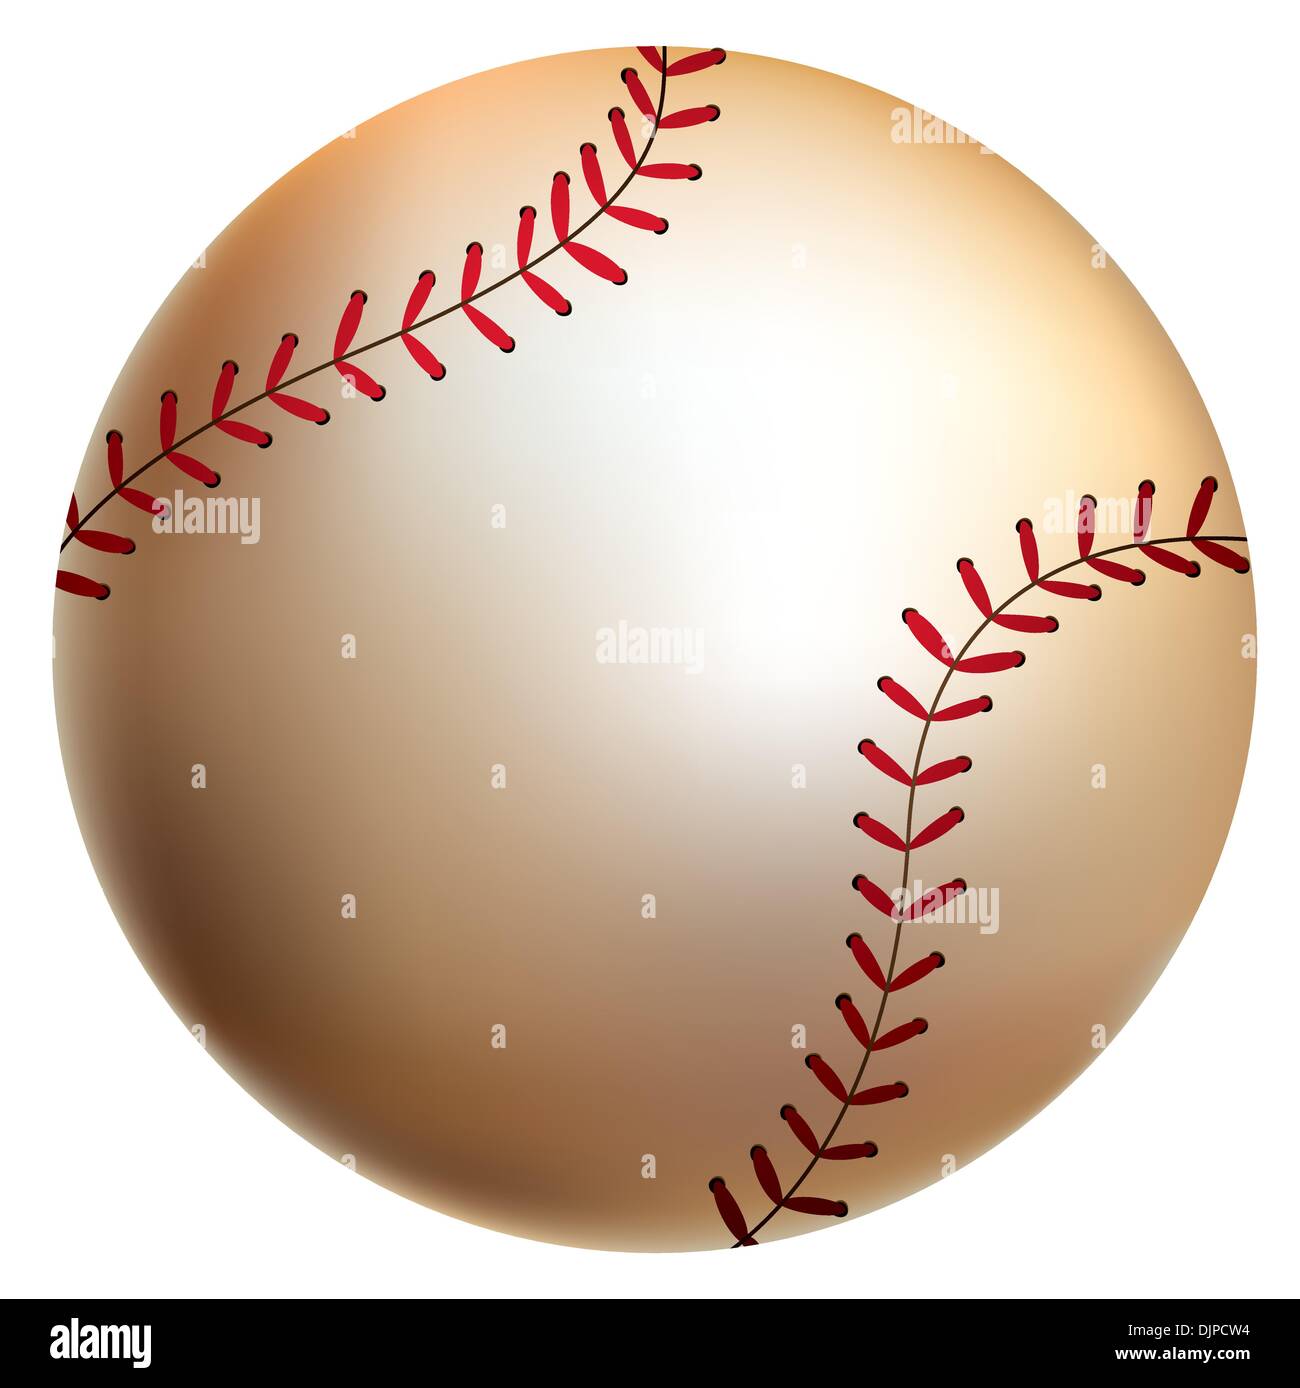 Isolated baseball ball Stock Vector